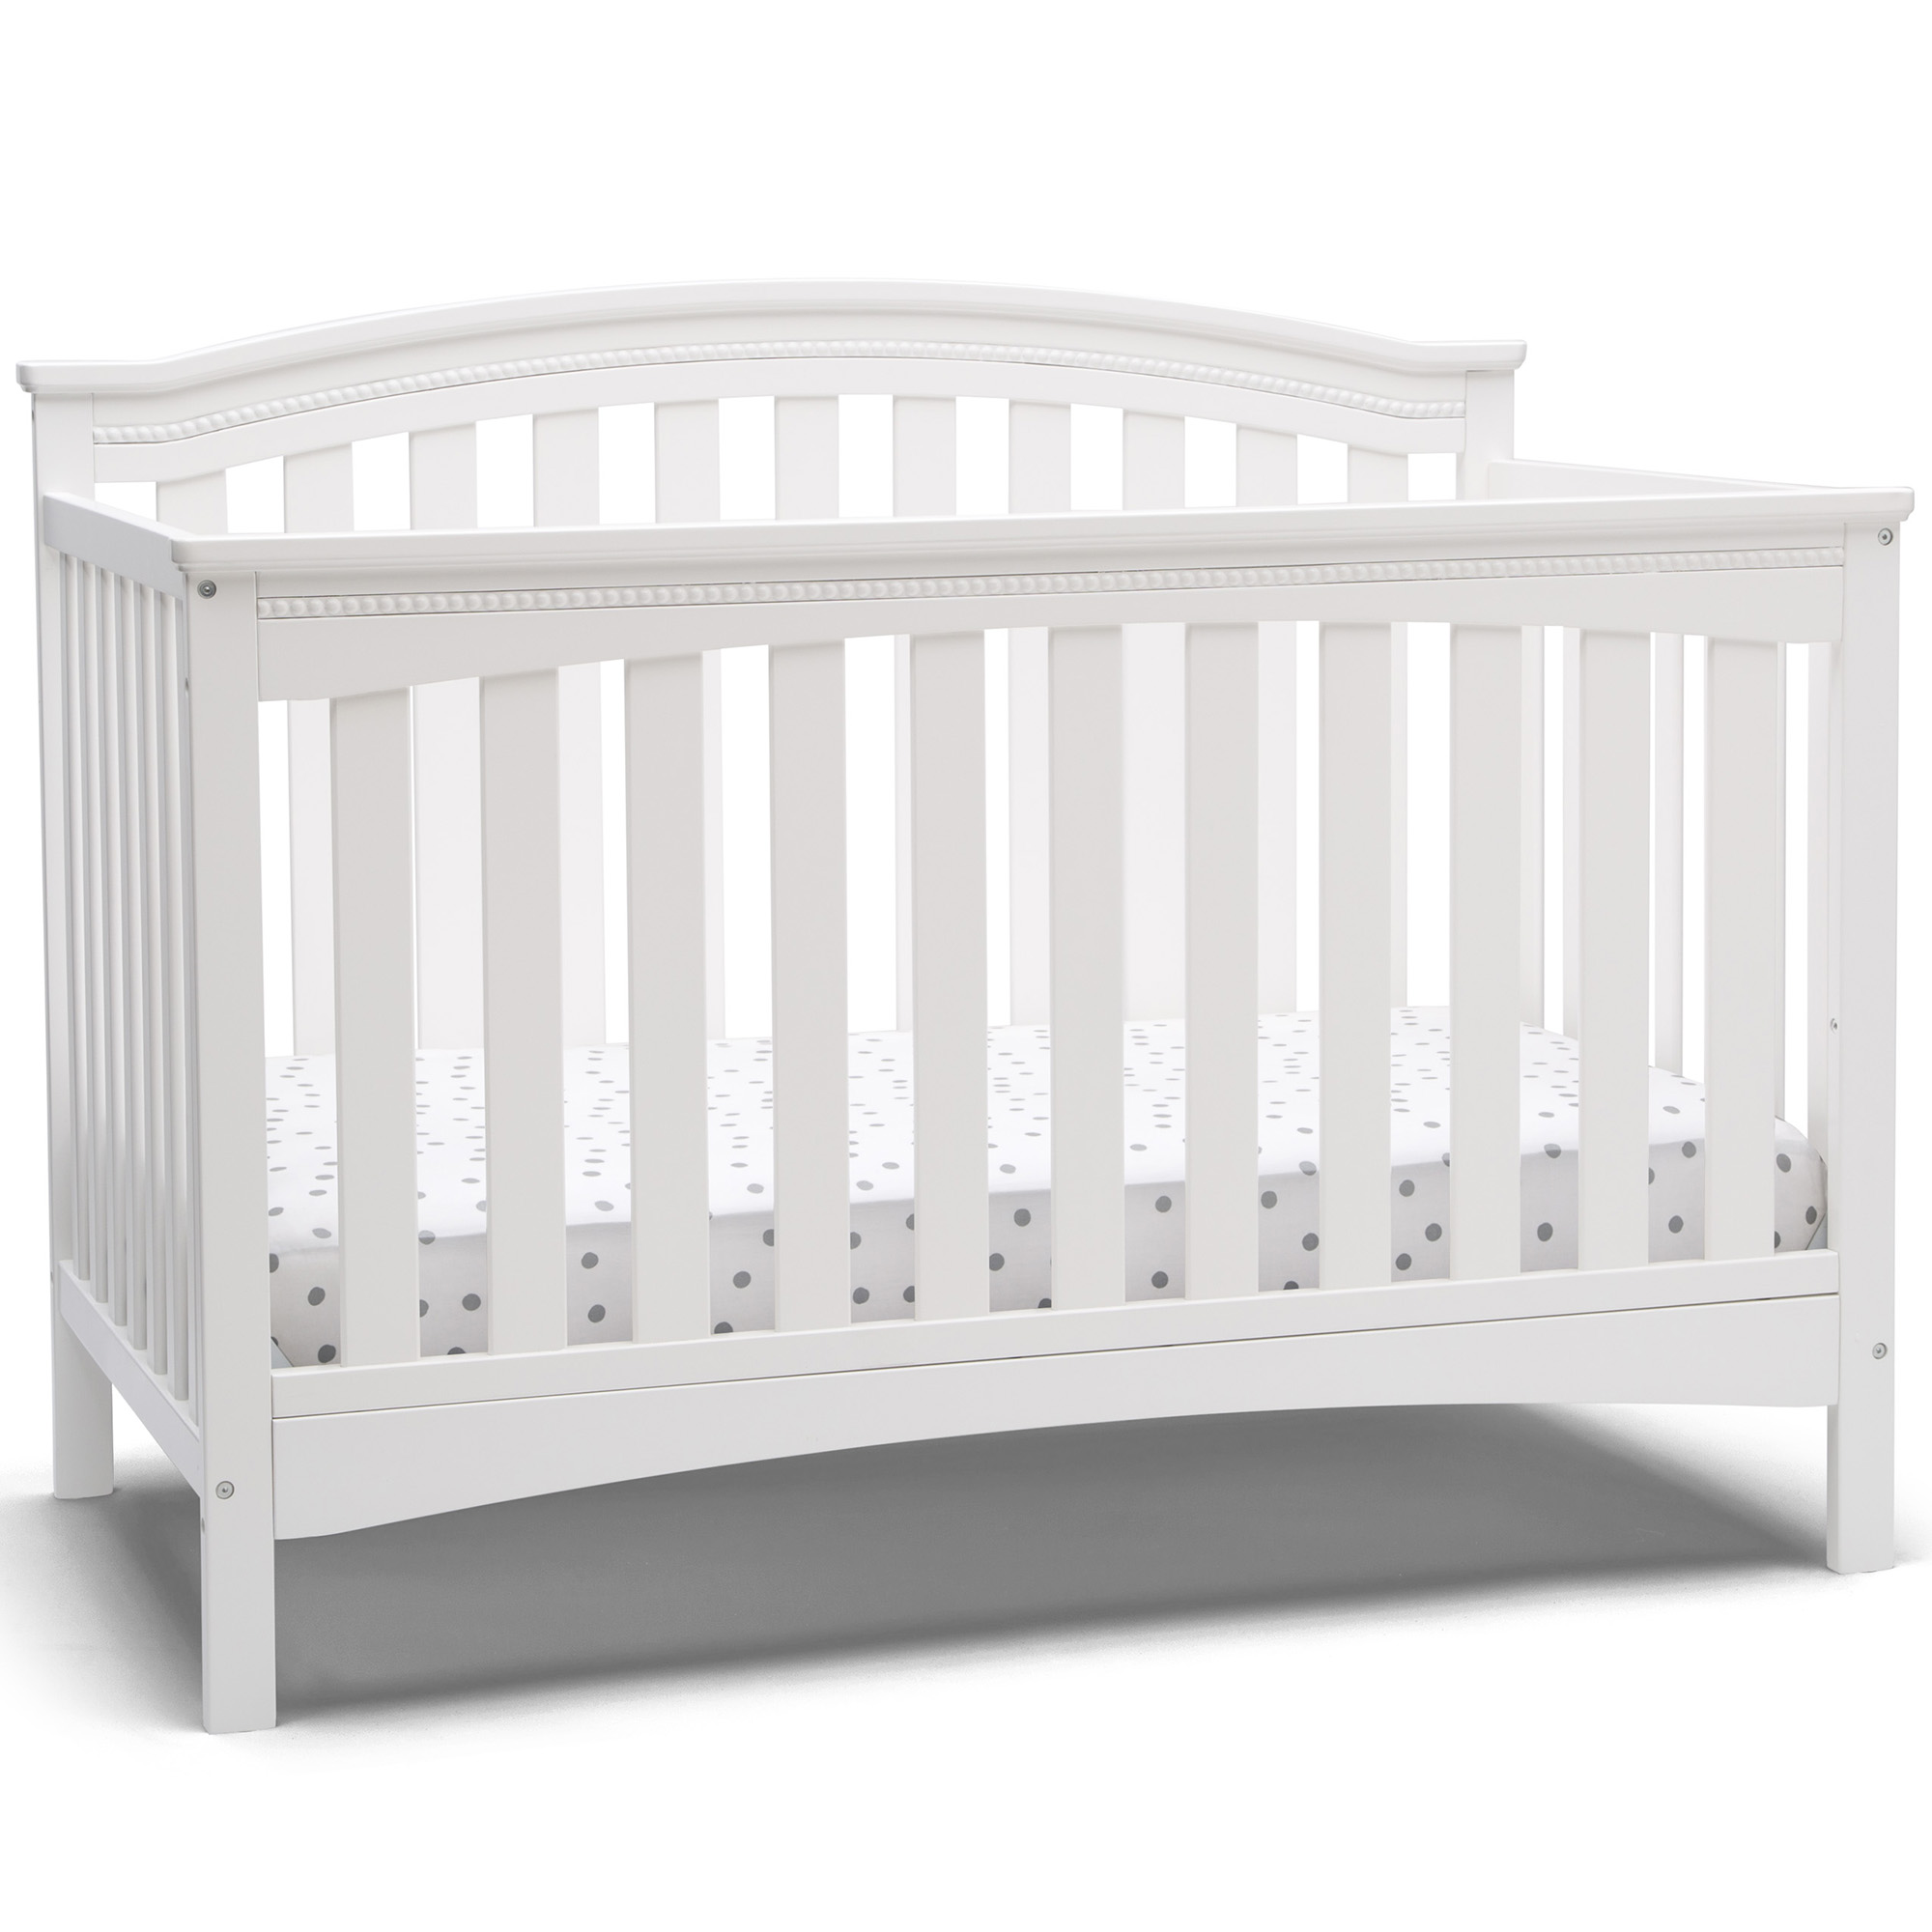 Delta Children Waverly 6-in-1 Convertible Baby Crib, Bianca White - image 1 of 15